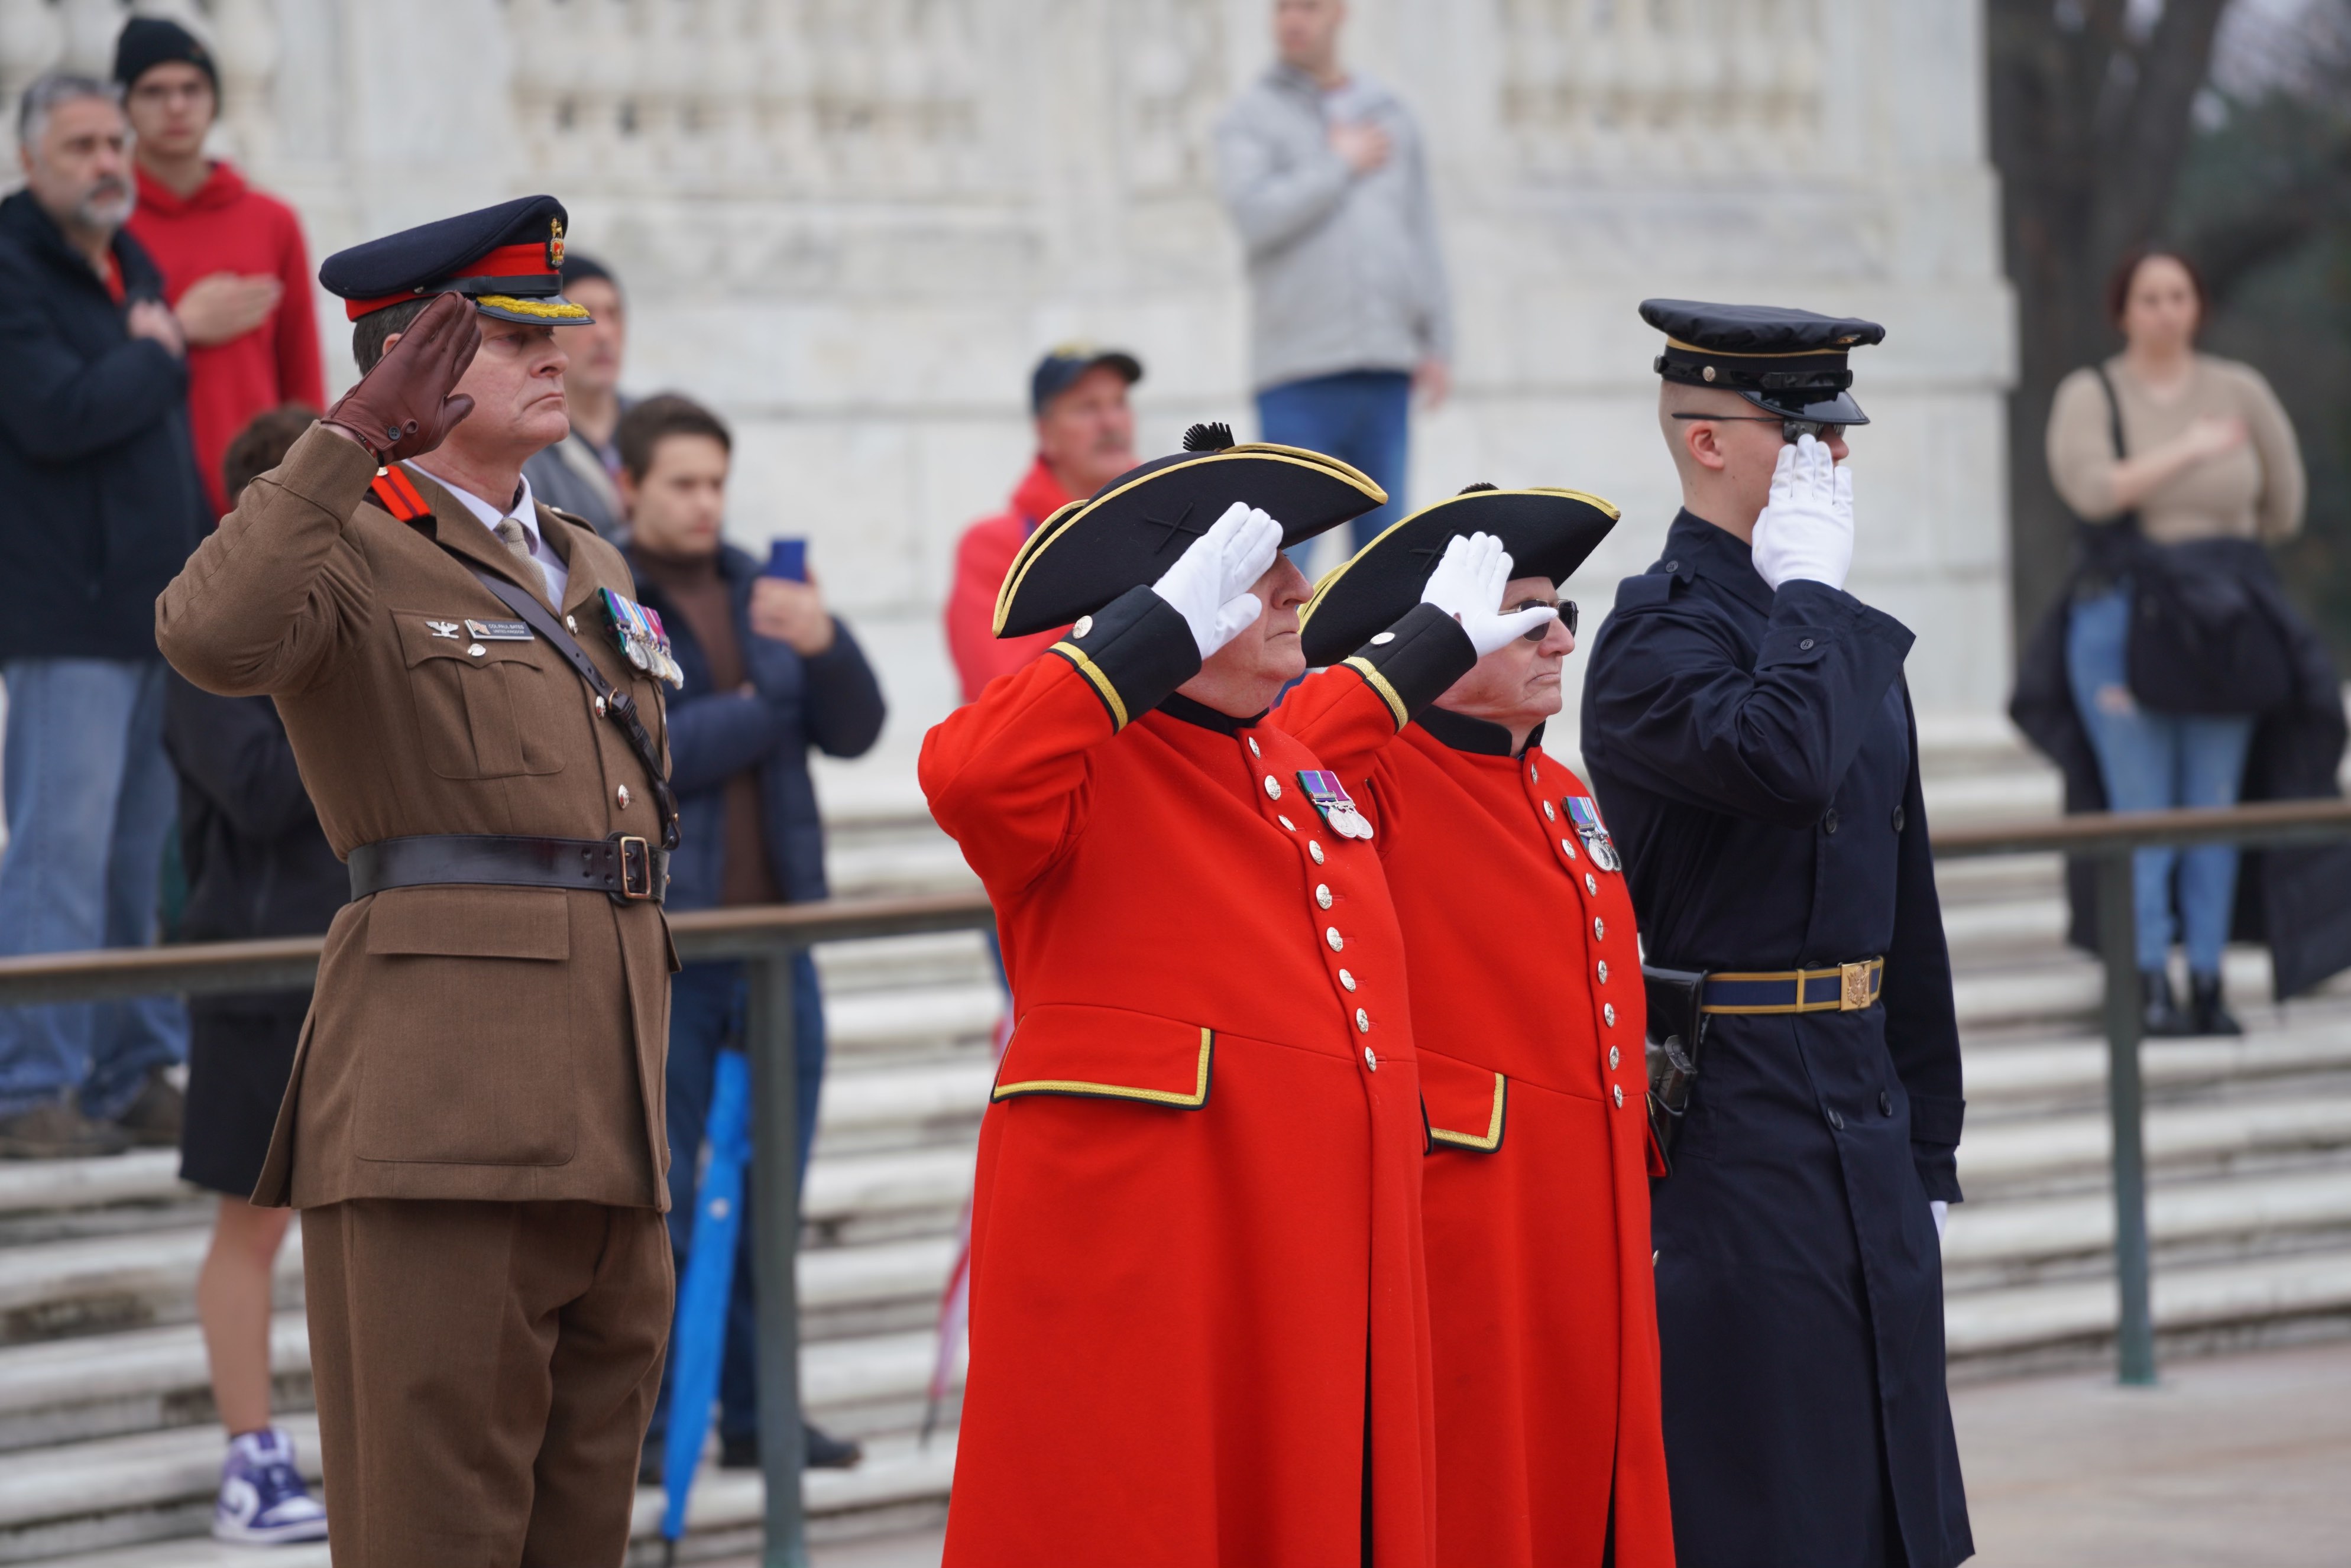 Chelsea Pensioners in scarlet uniforms saluting